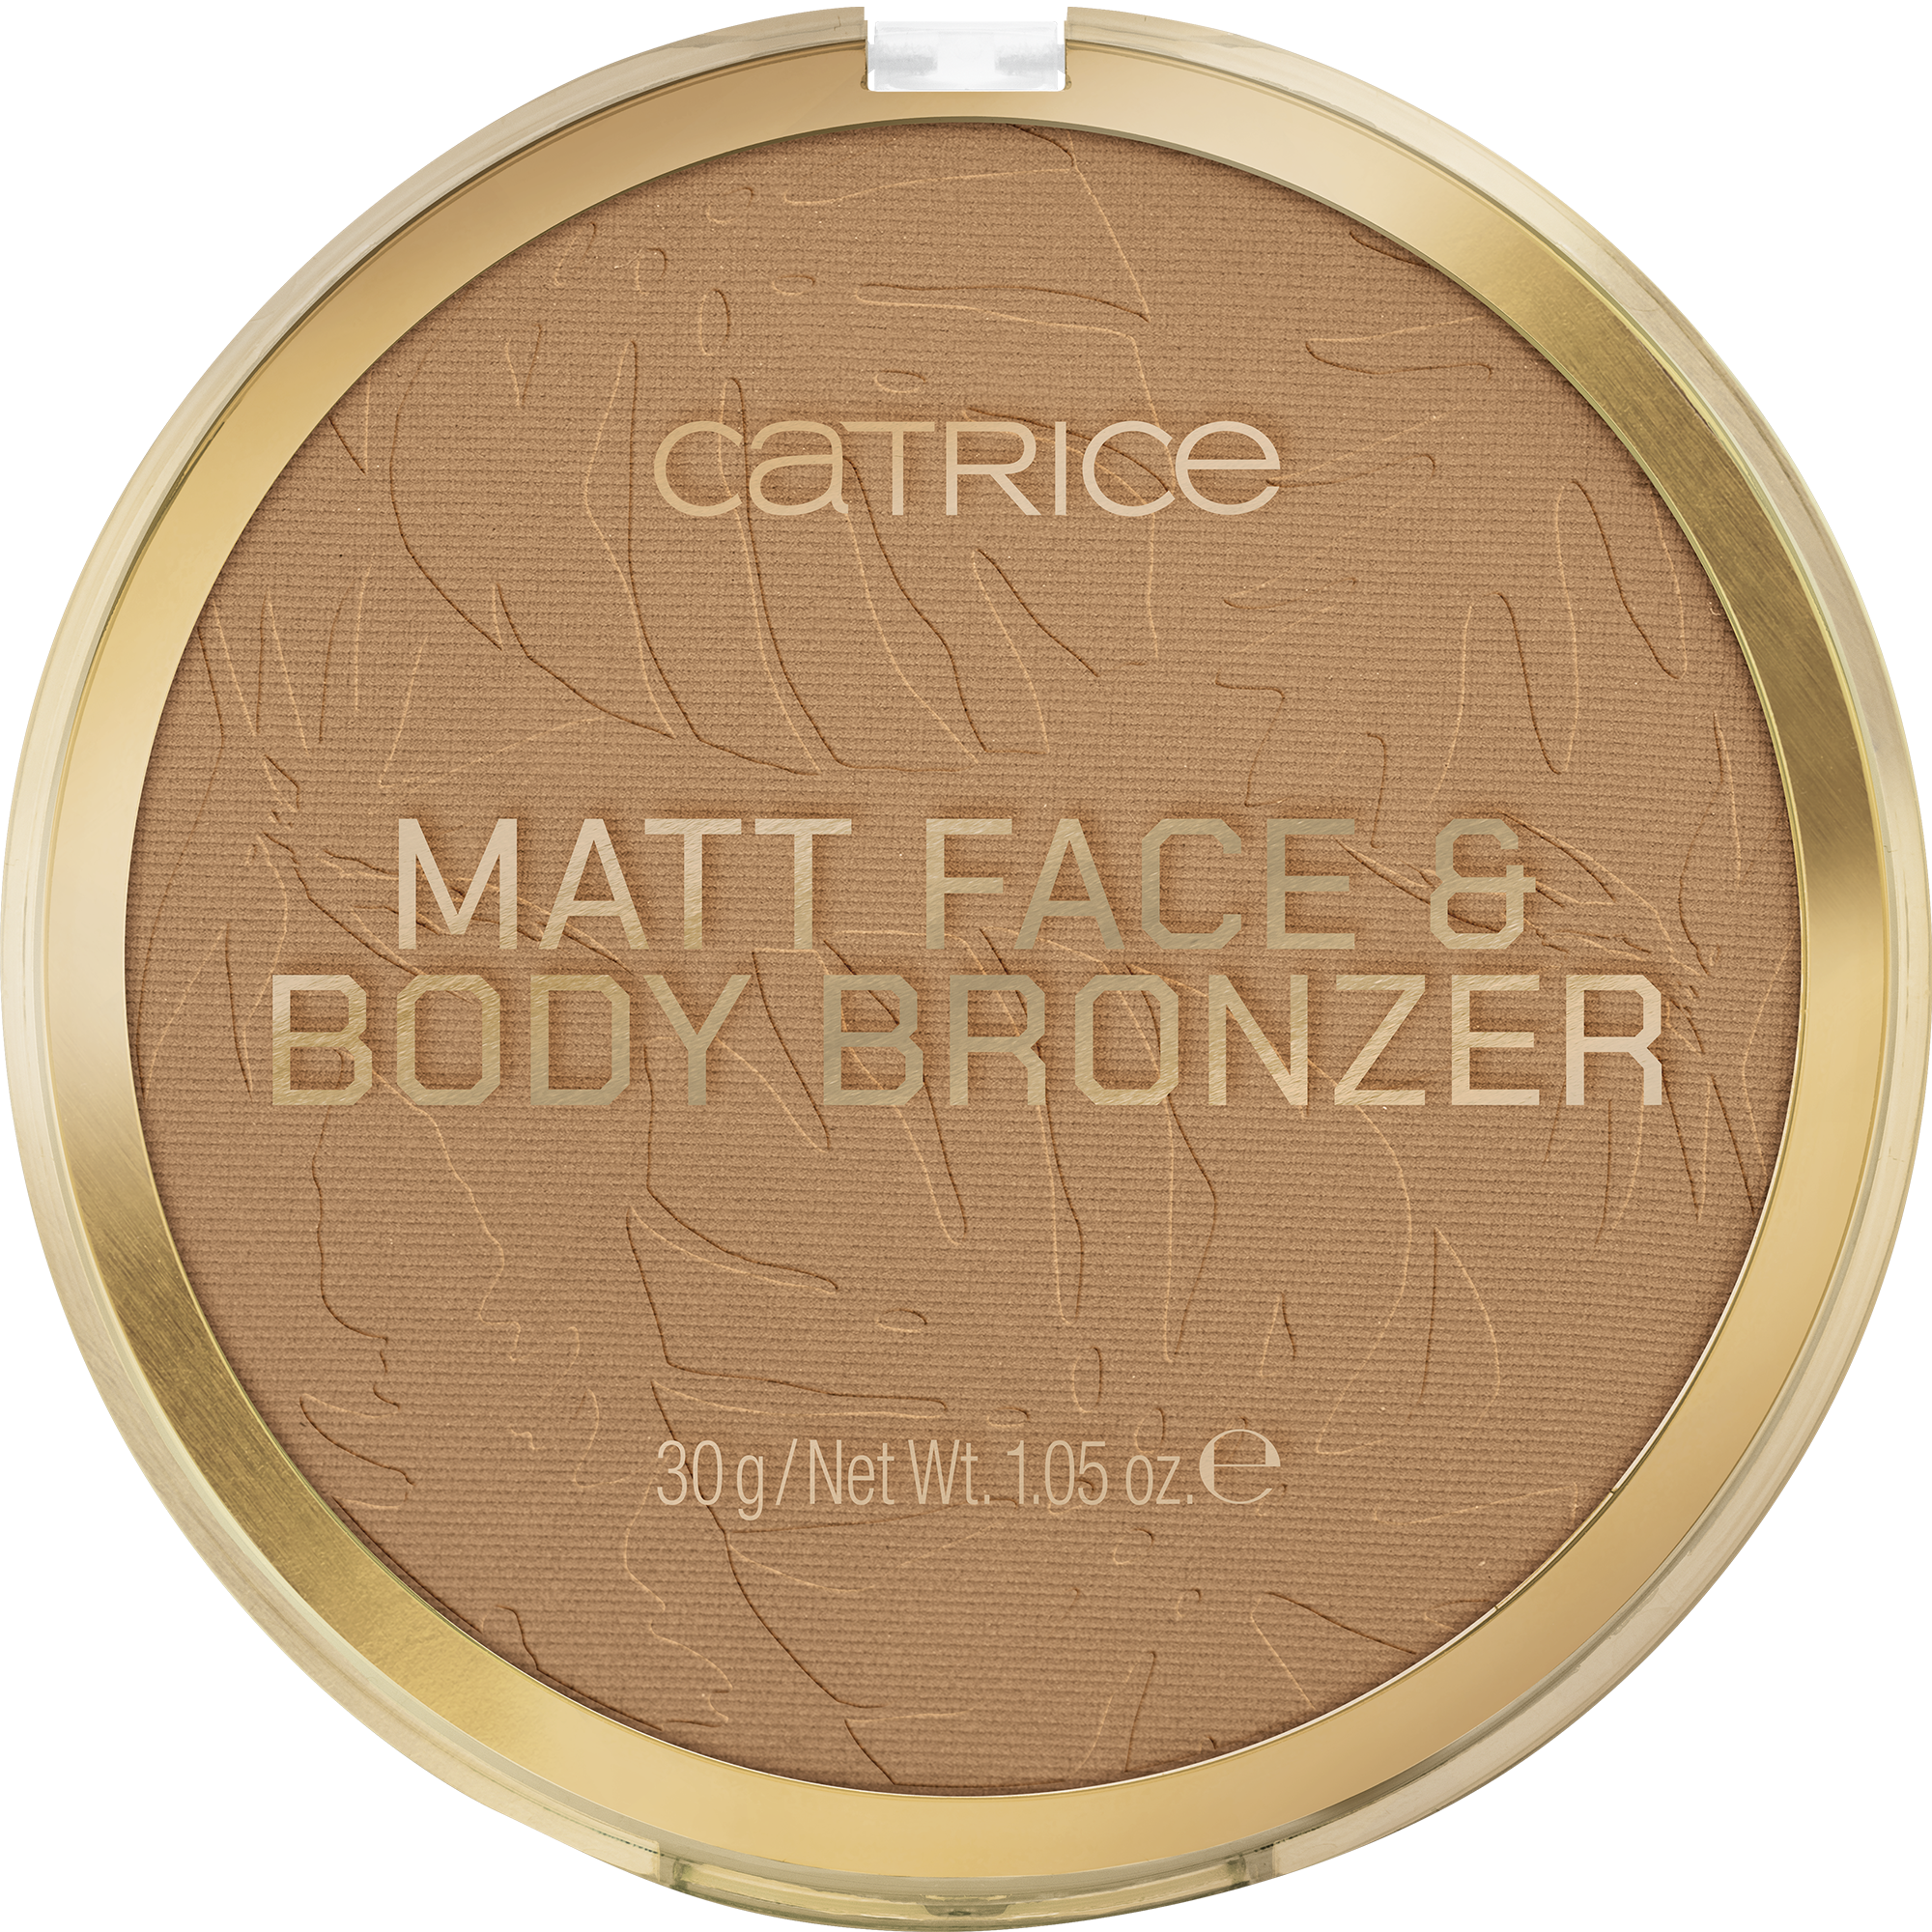 Tropic Exotic Matt Face & Body Bronzer